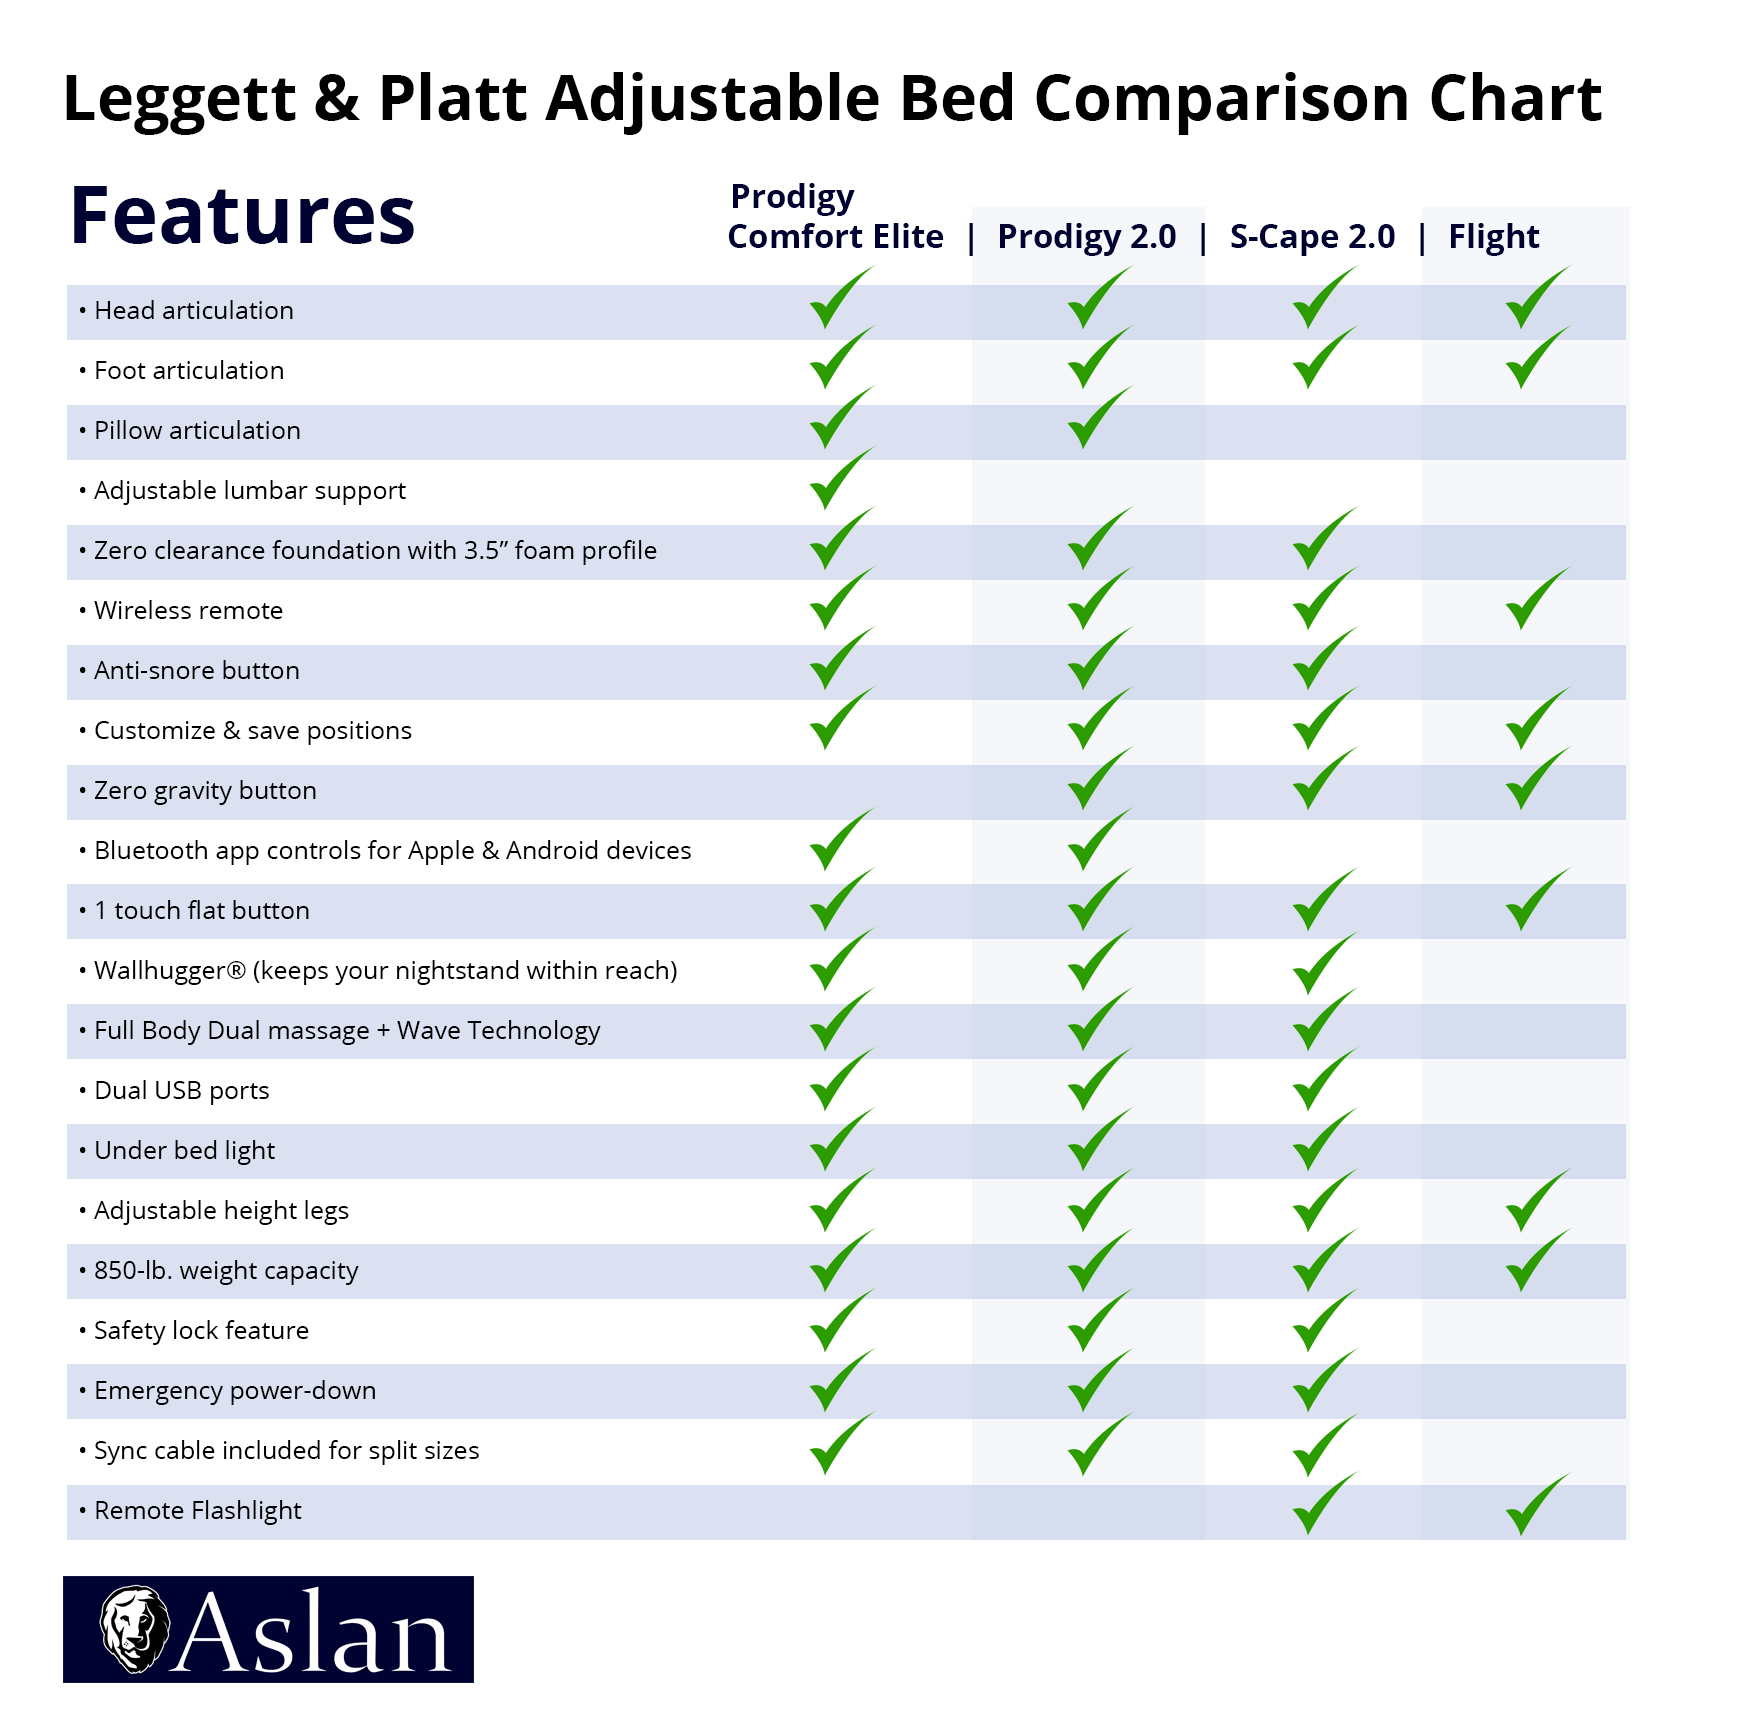 Leggett & Platt adjustable bed comparison chart 2021